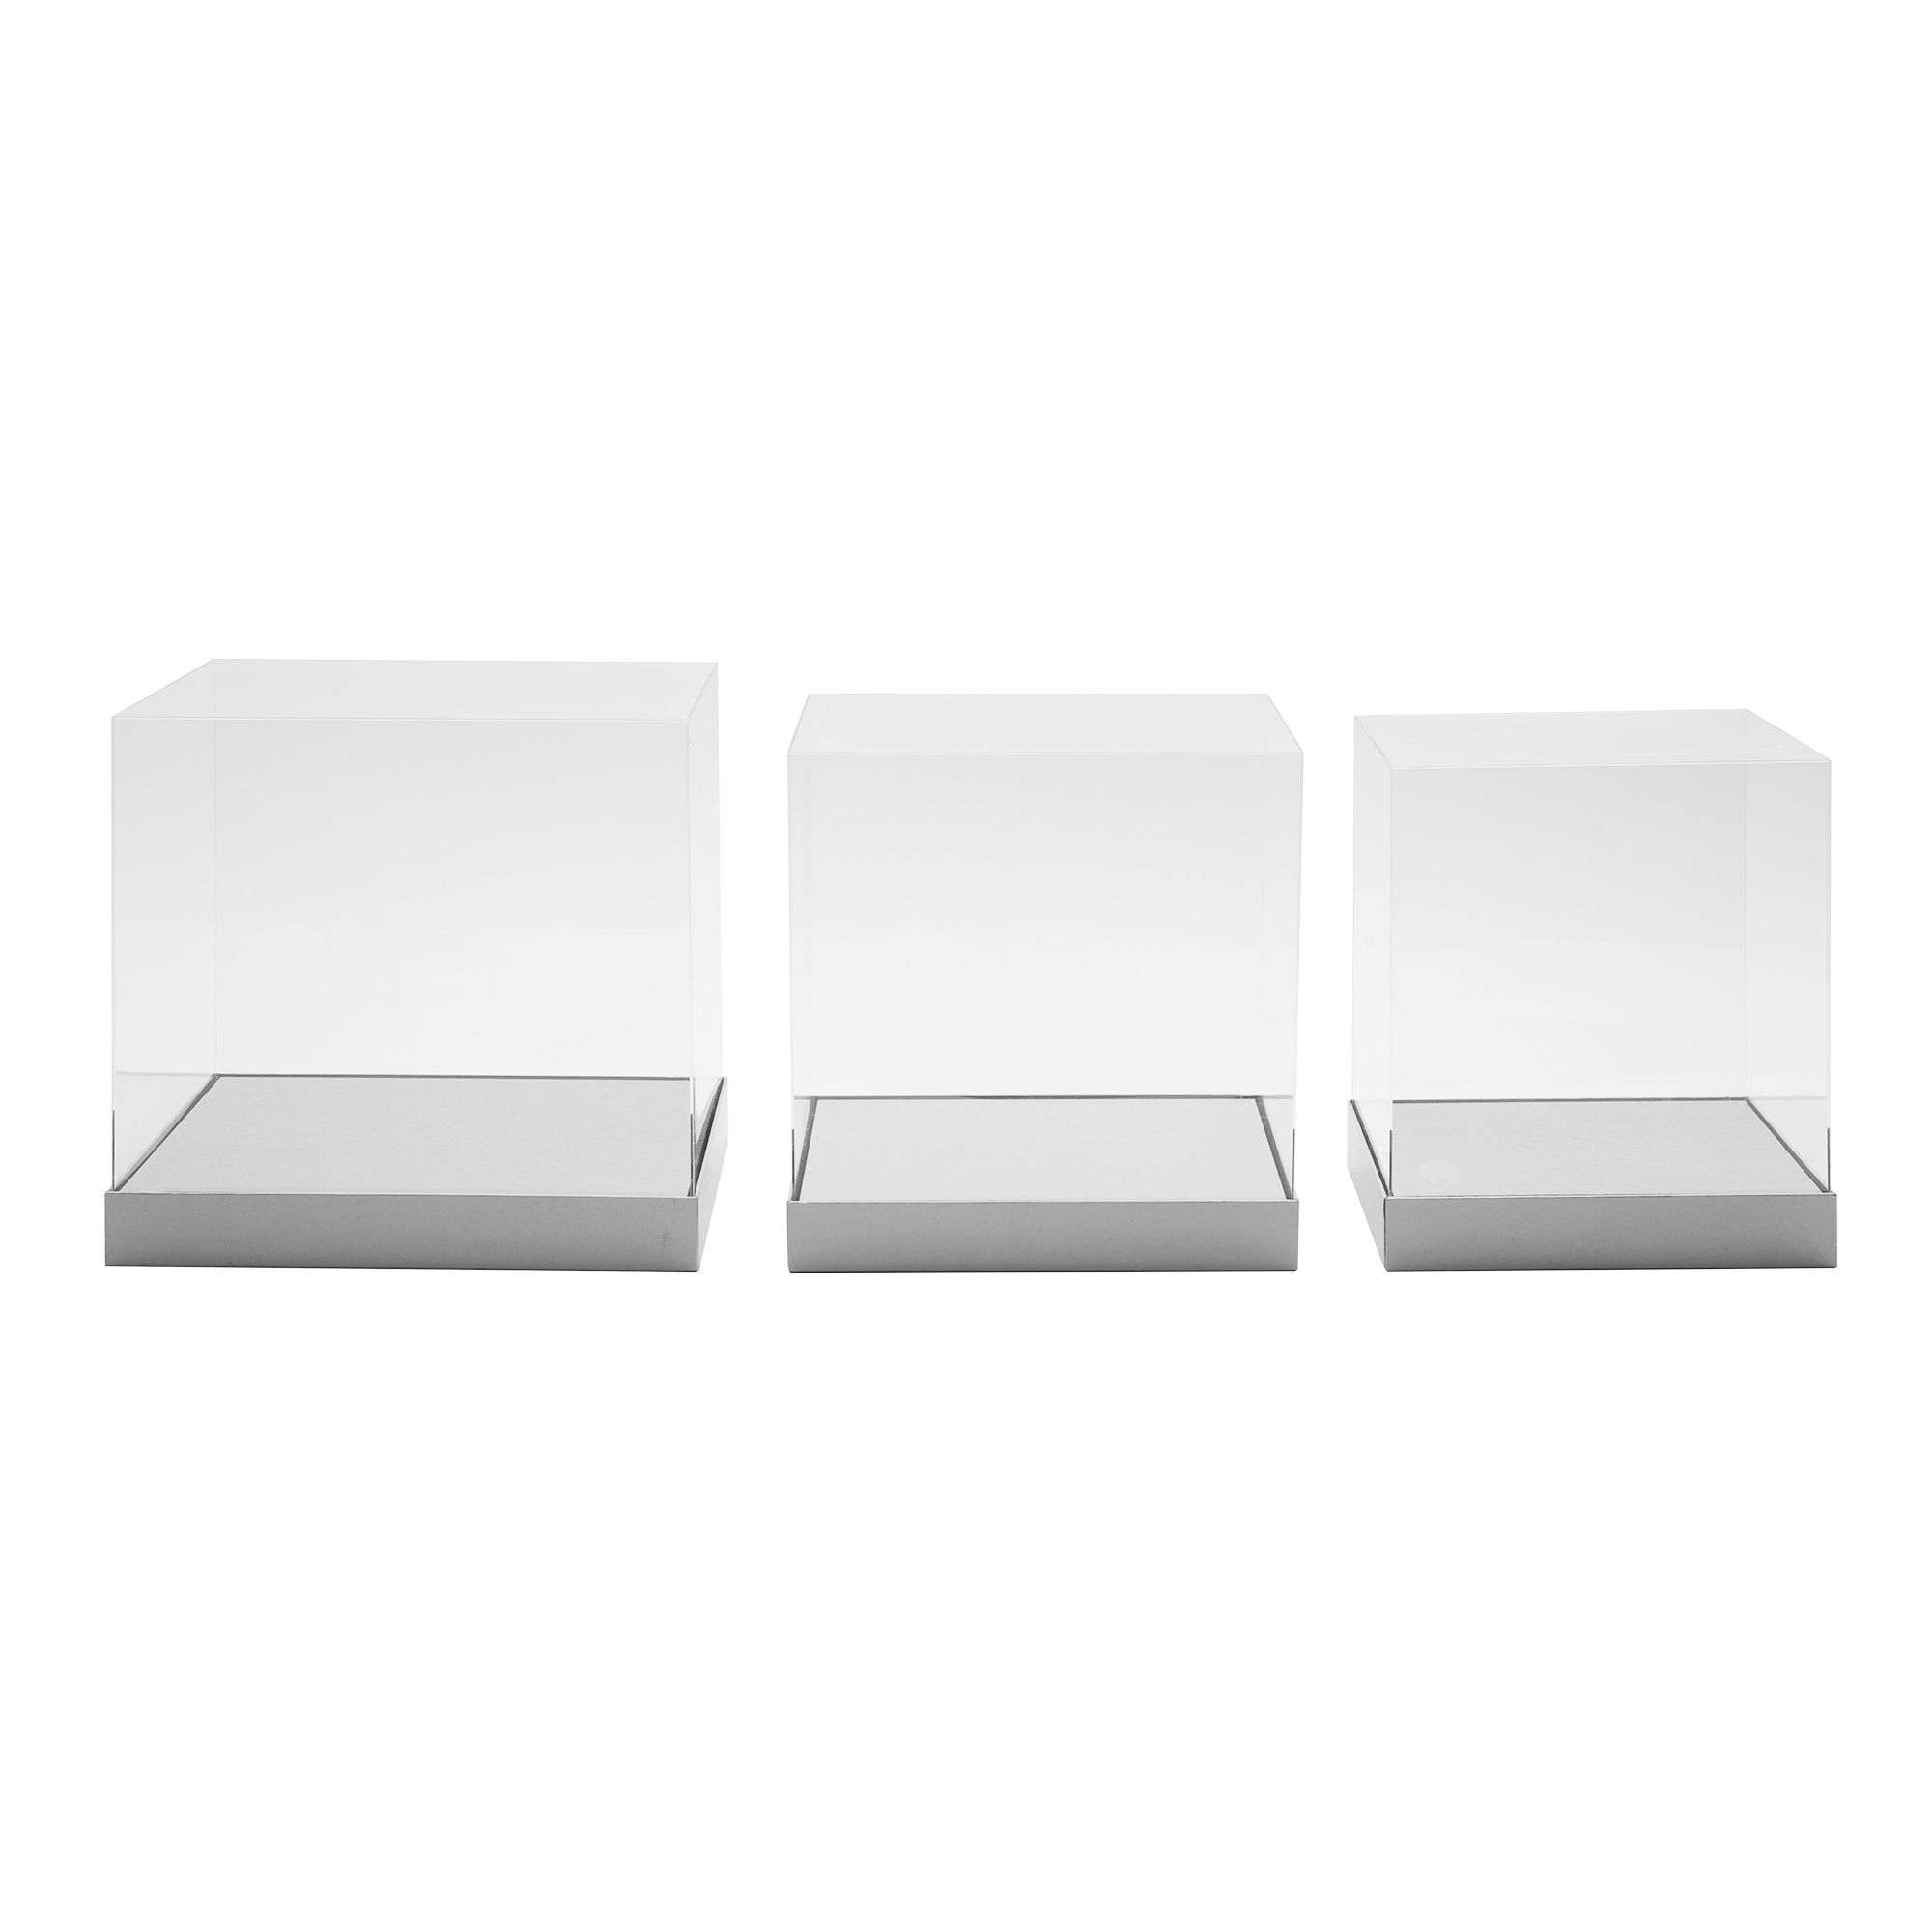 Acrylic Gift Box 3pc/set - Silver